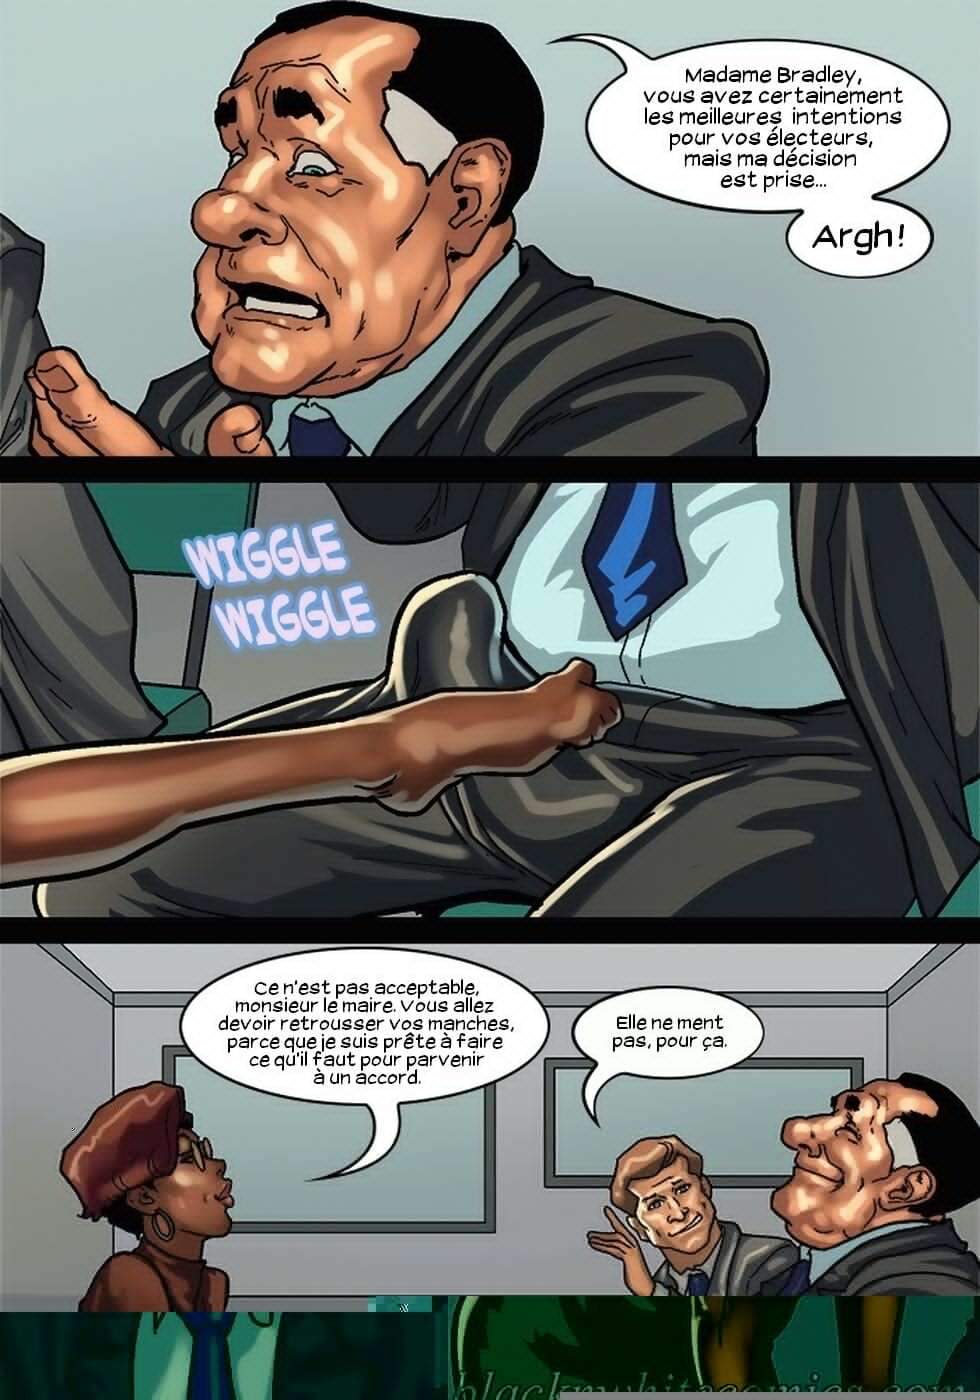 The Mayor 3 Comic